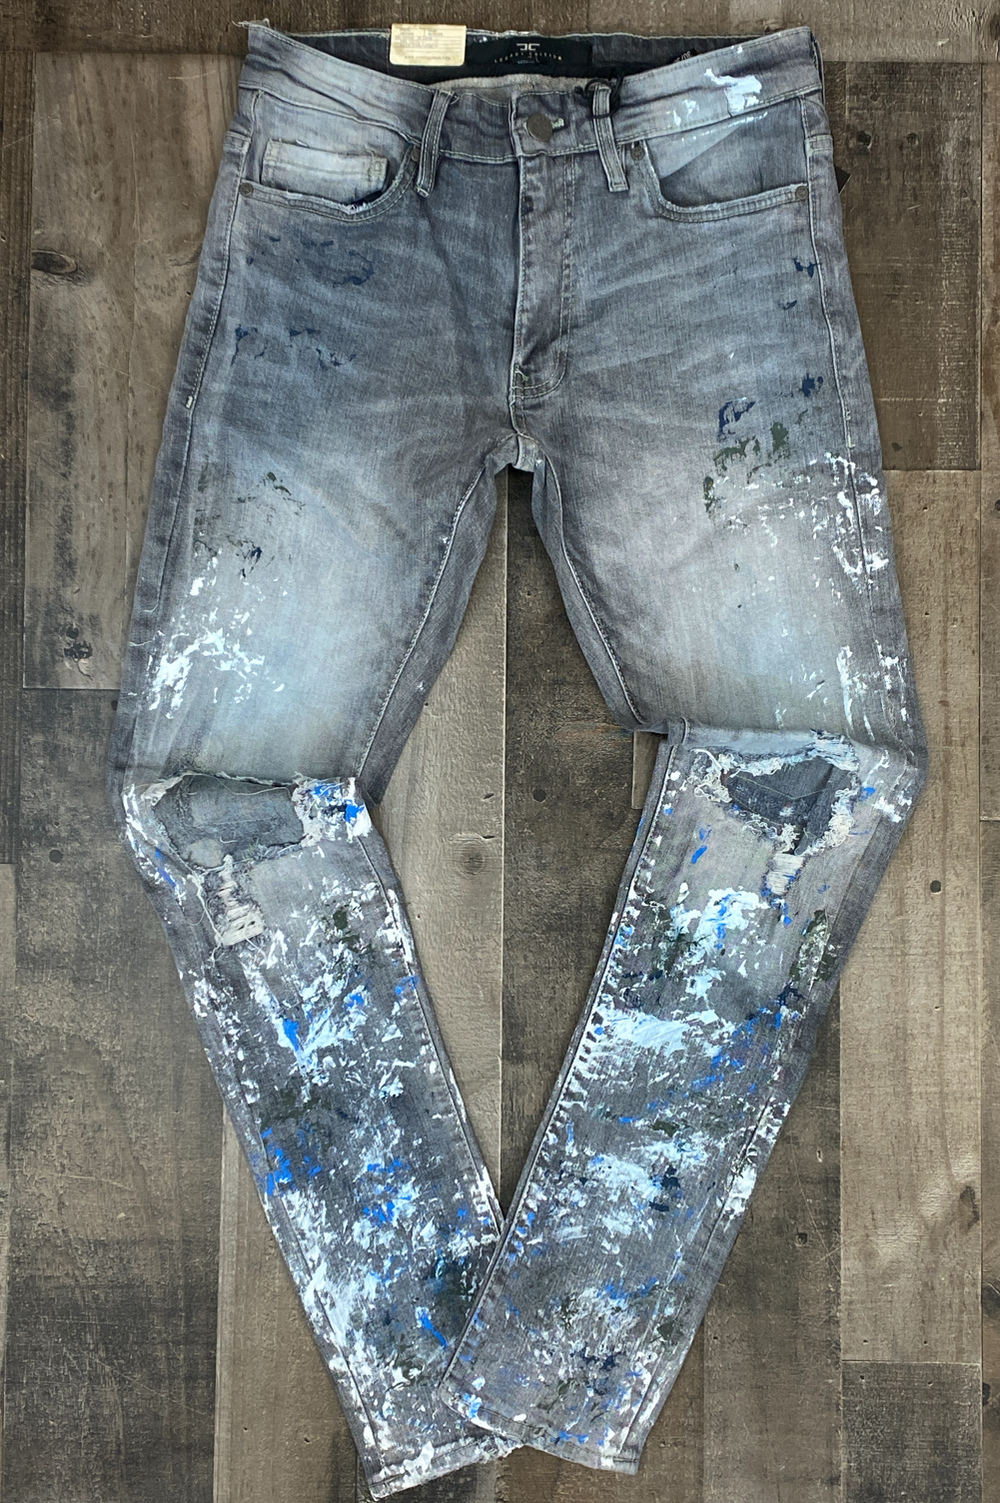 Jordan Craig- painted jeans